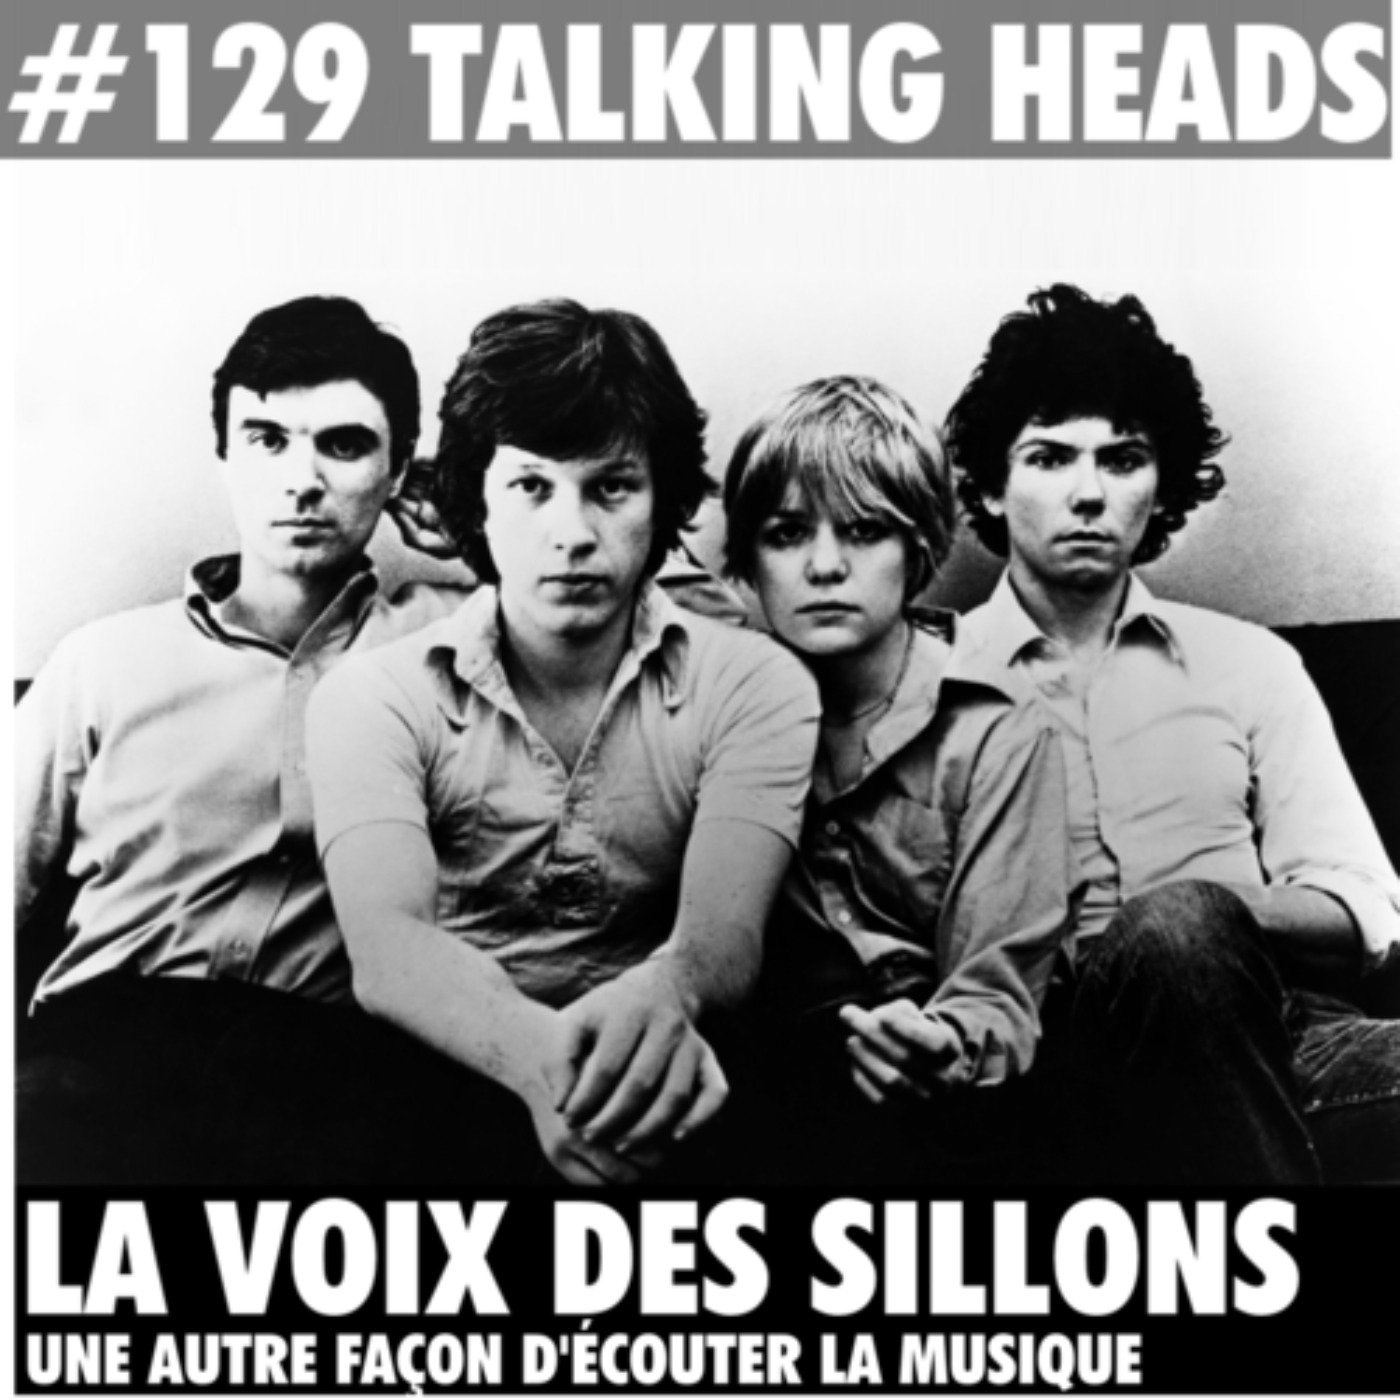 Killers talking. Talking heads. "Talking heads" && ( исполнитель | группа | музыка | Music | Band | artist ) && (фото | photo). Psycho Killer 2003 Remaster talking heads фото.